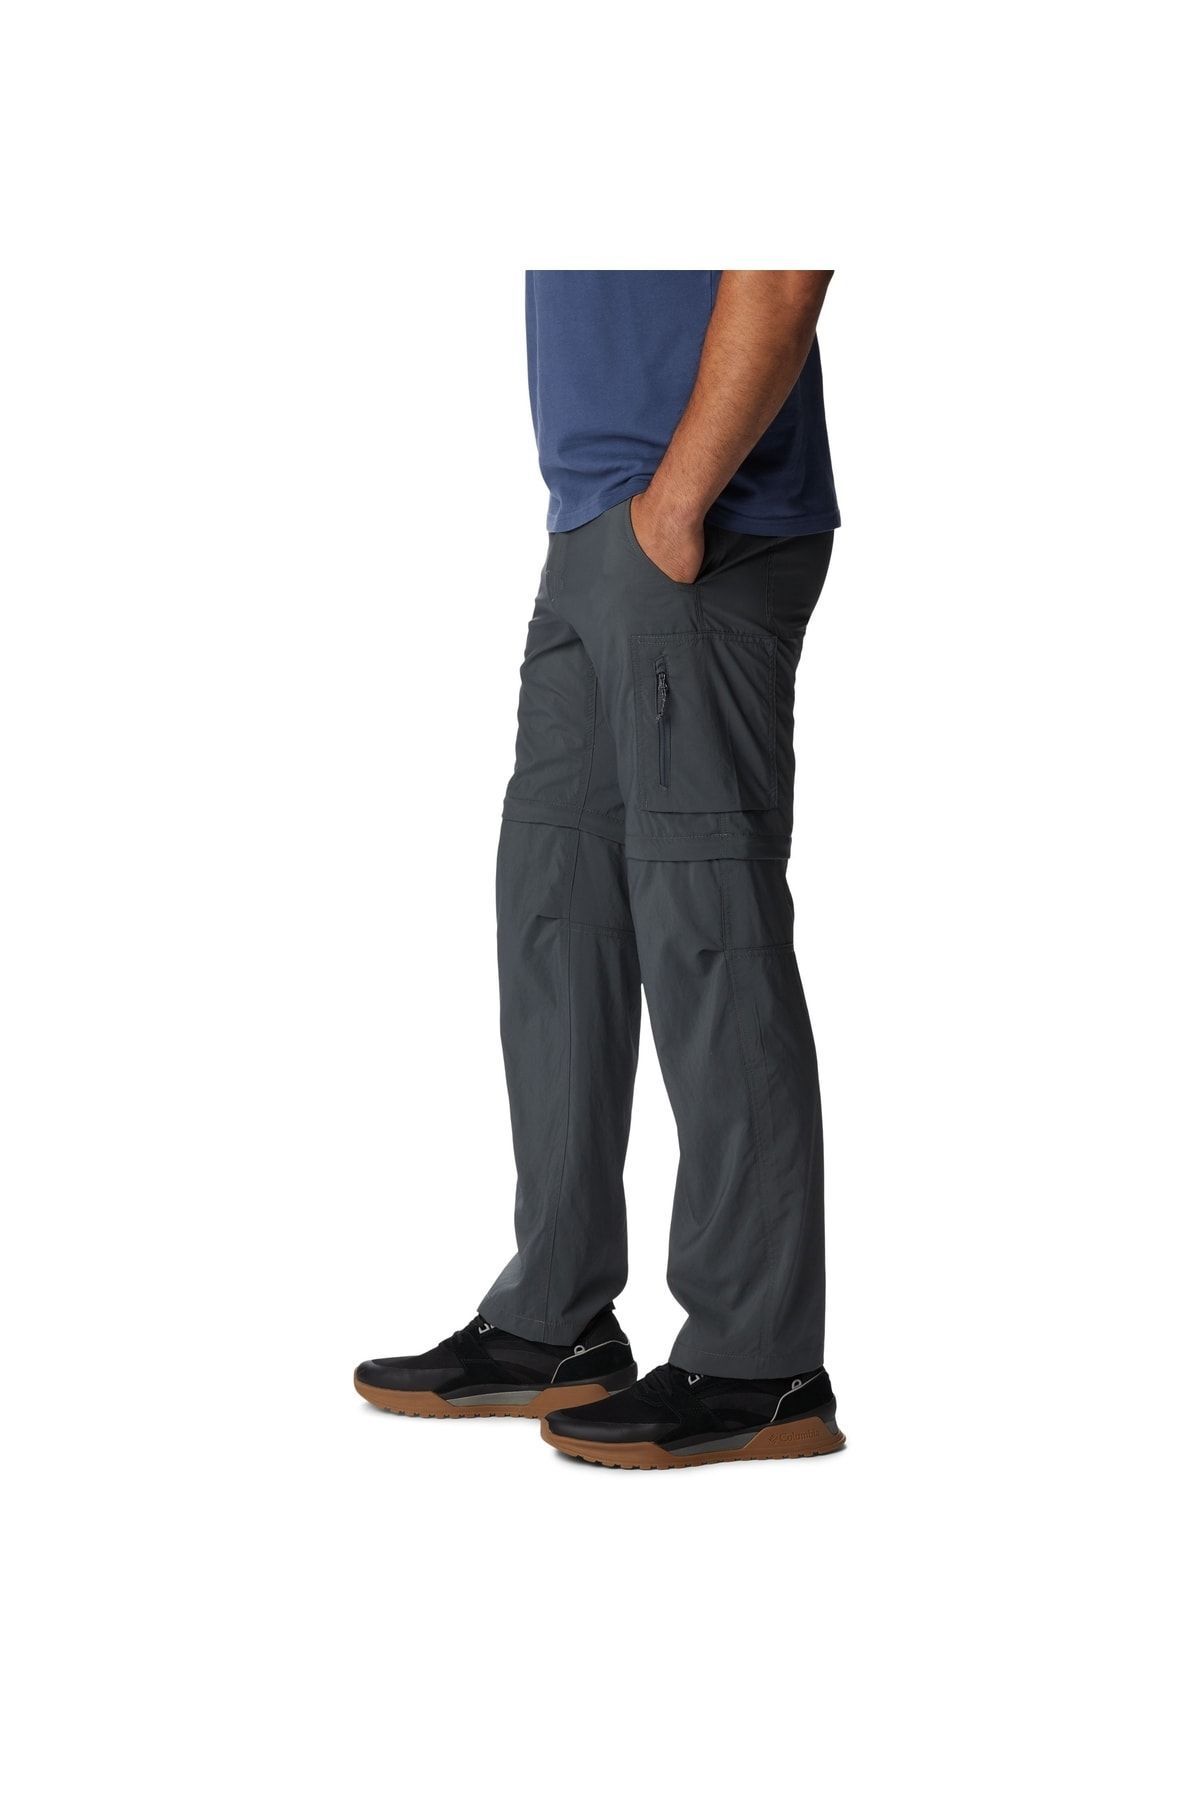 Columbia Silver Ridge Utility Convertible Pants - Men's